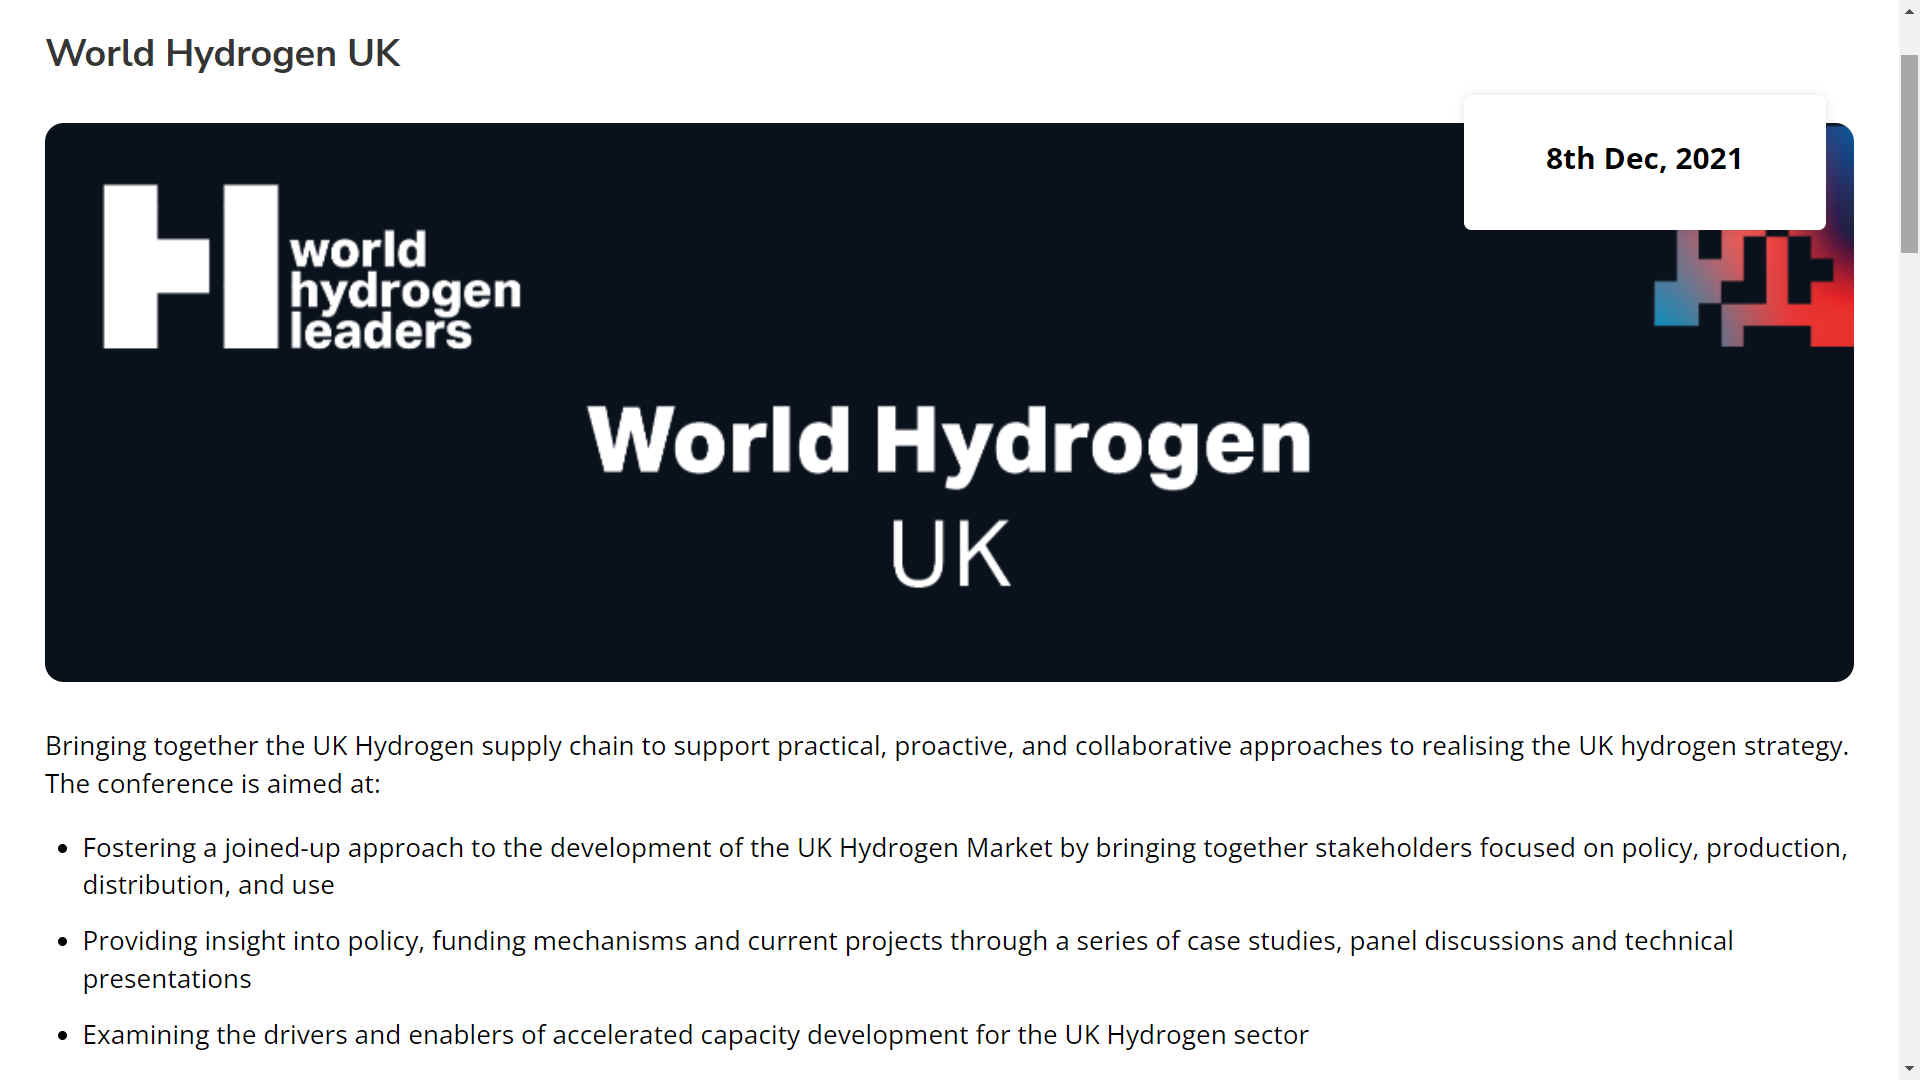 Green Power Global UK world hydrogen conference online 8th December 2021